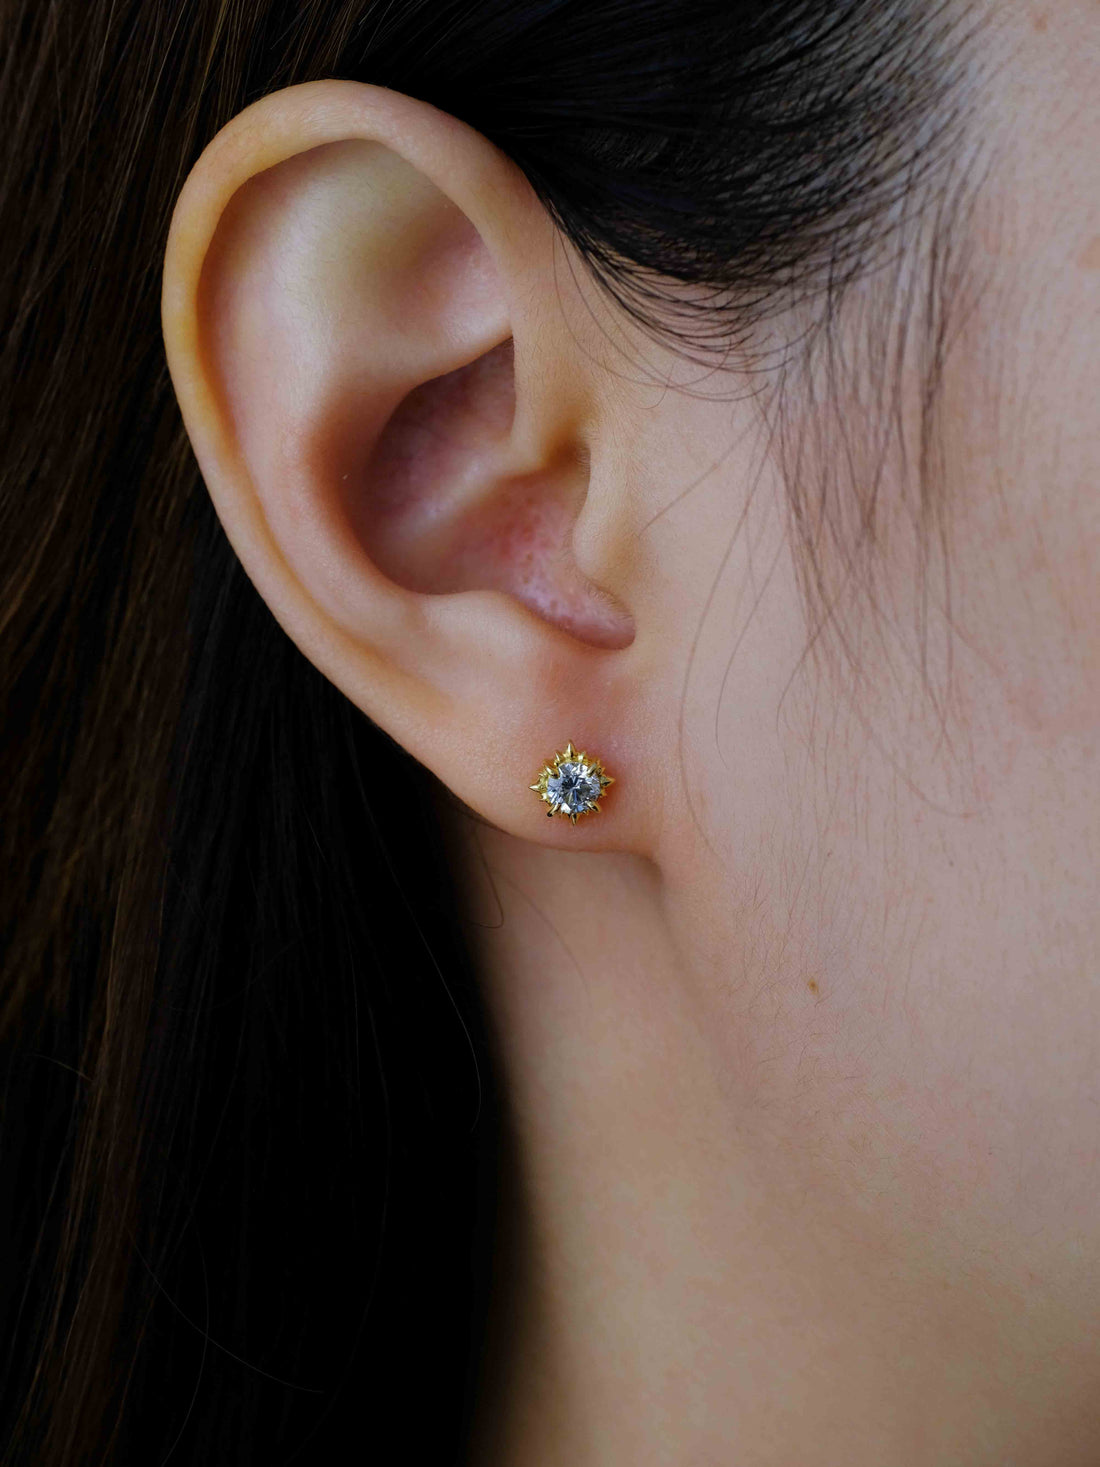 Sun Star Diamond Earrings, 18k solid gold